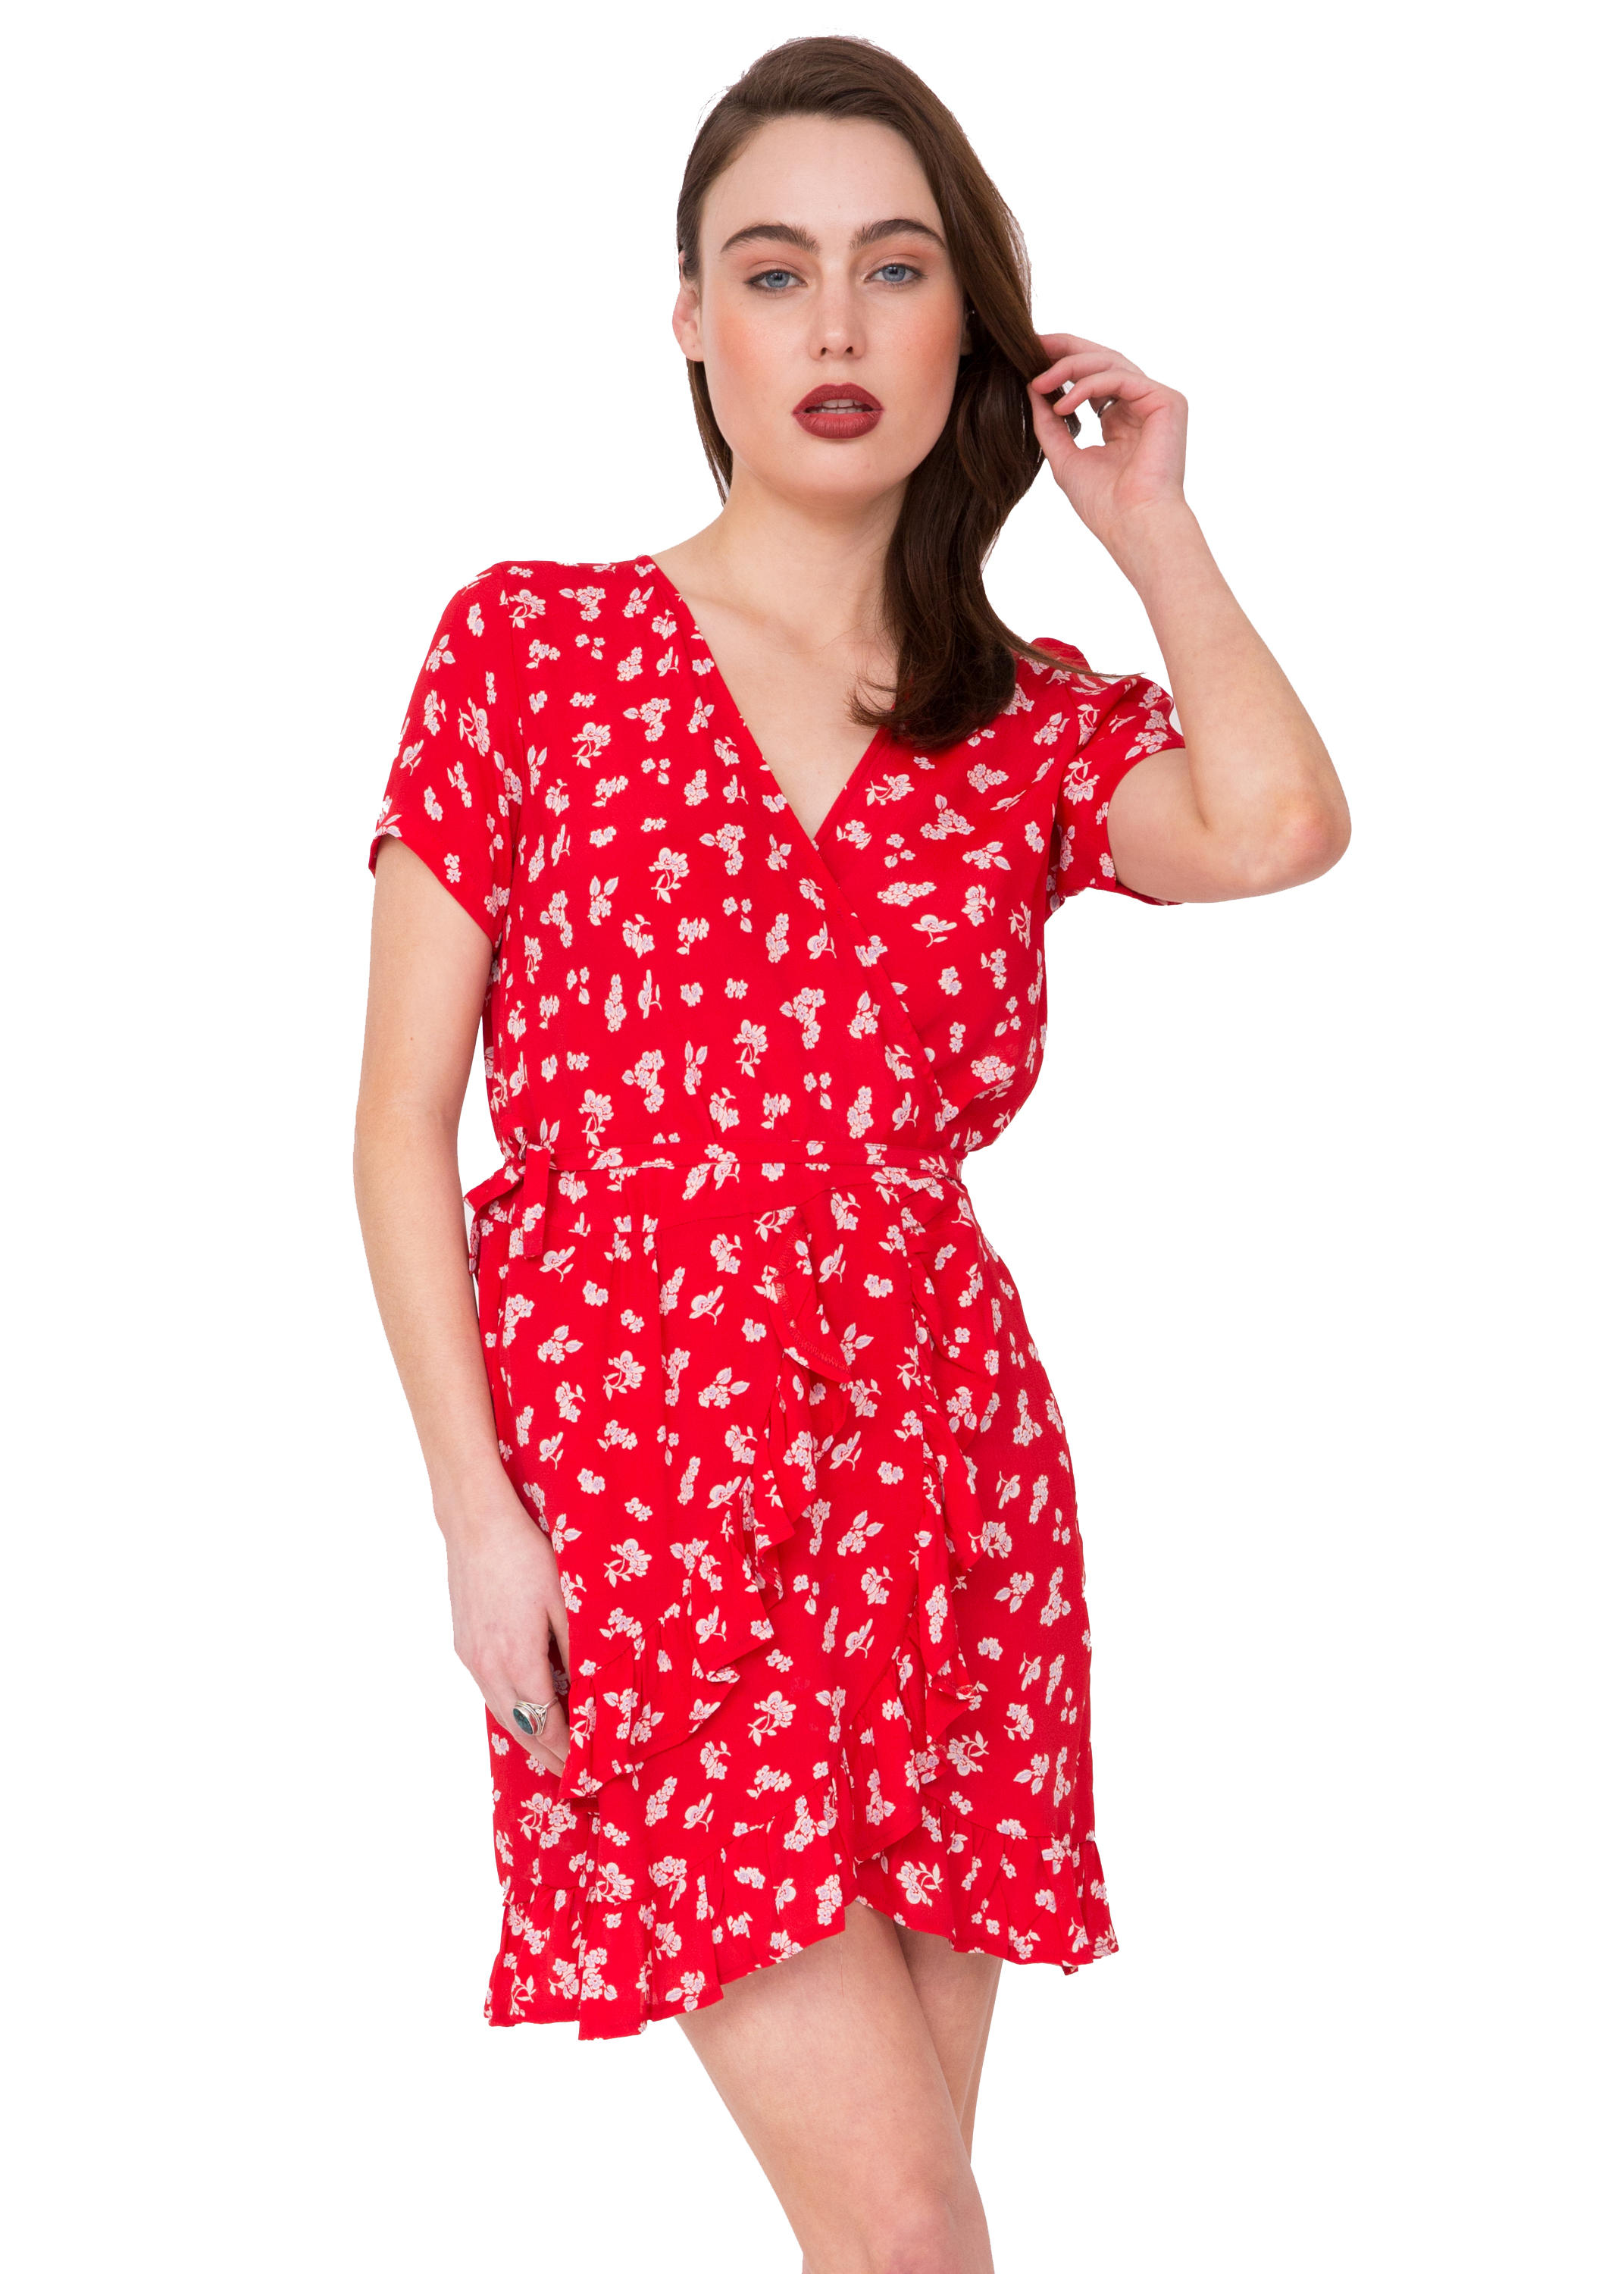 red mini ruffle dress Big sale - OFF 79%